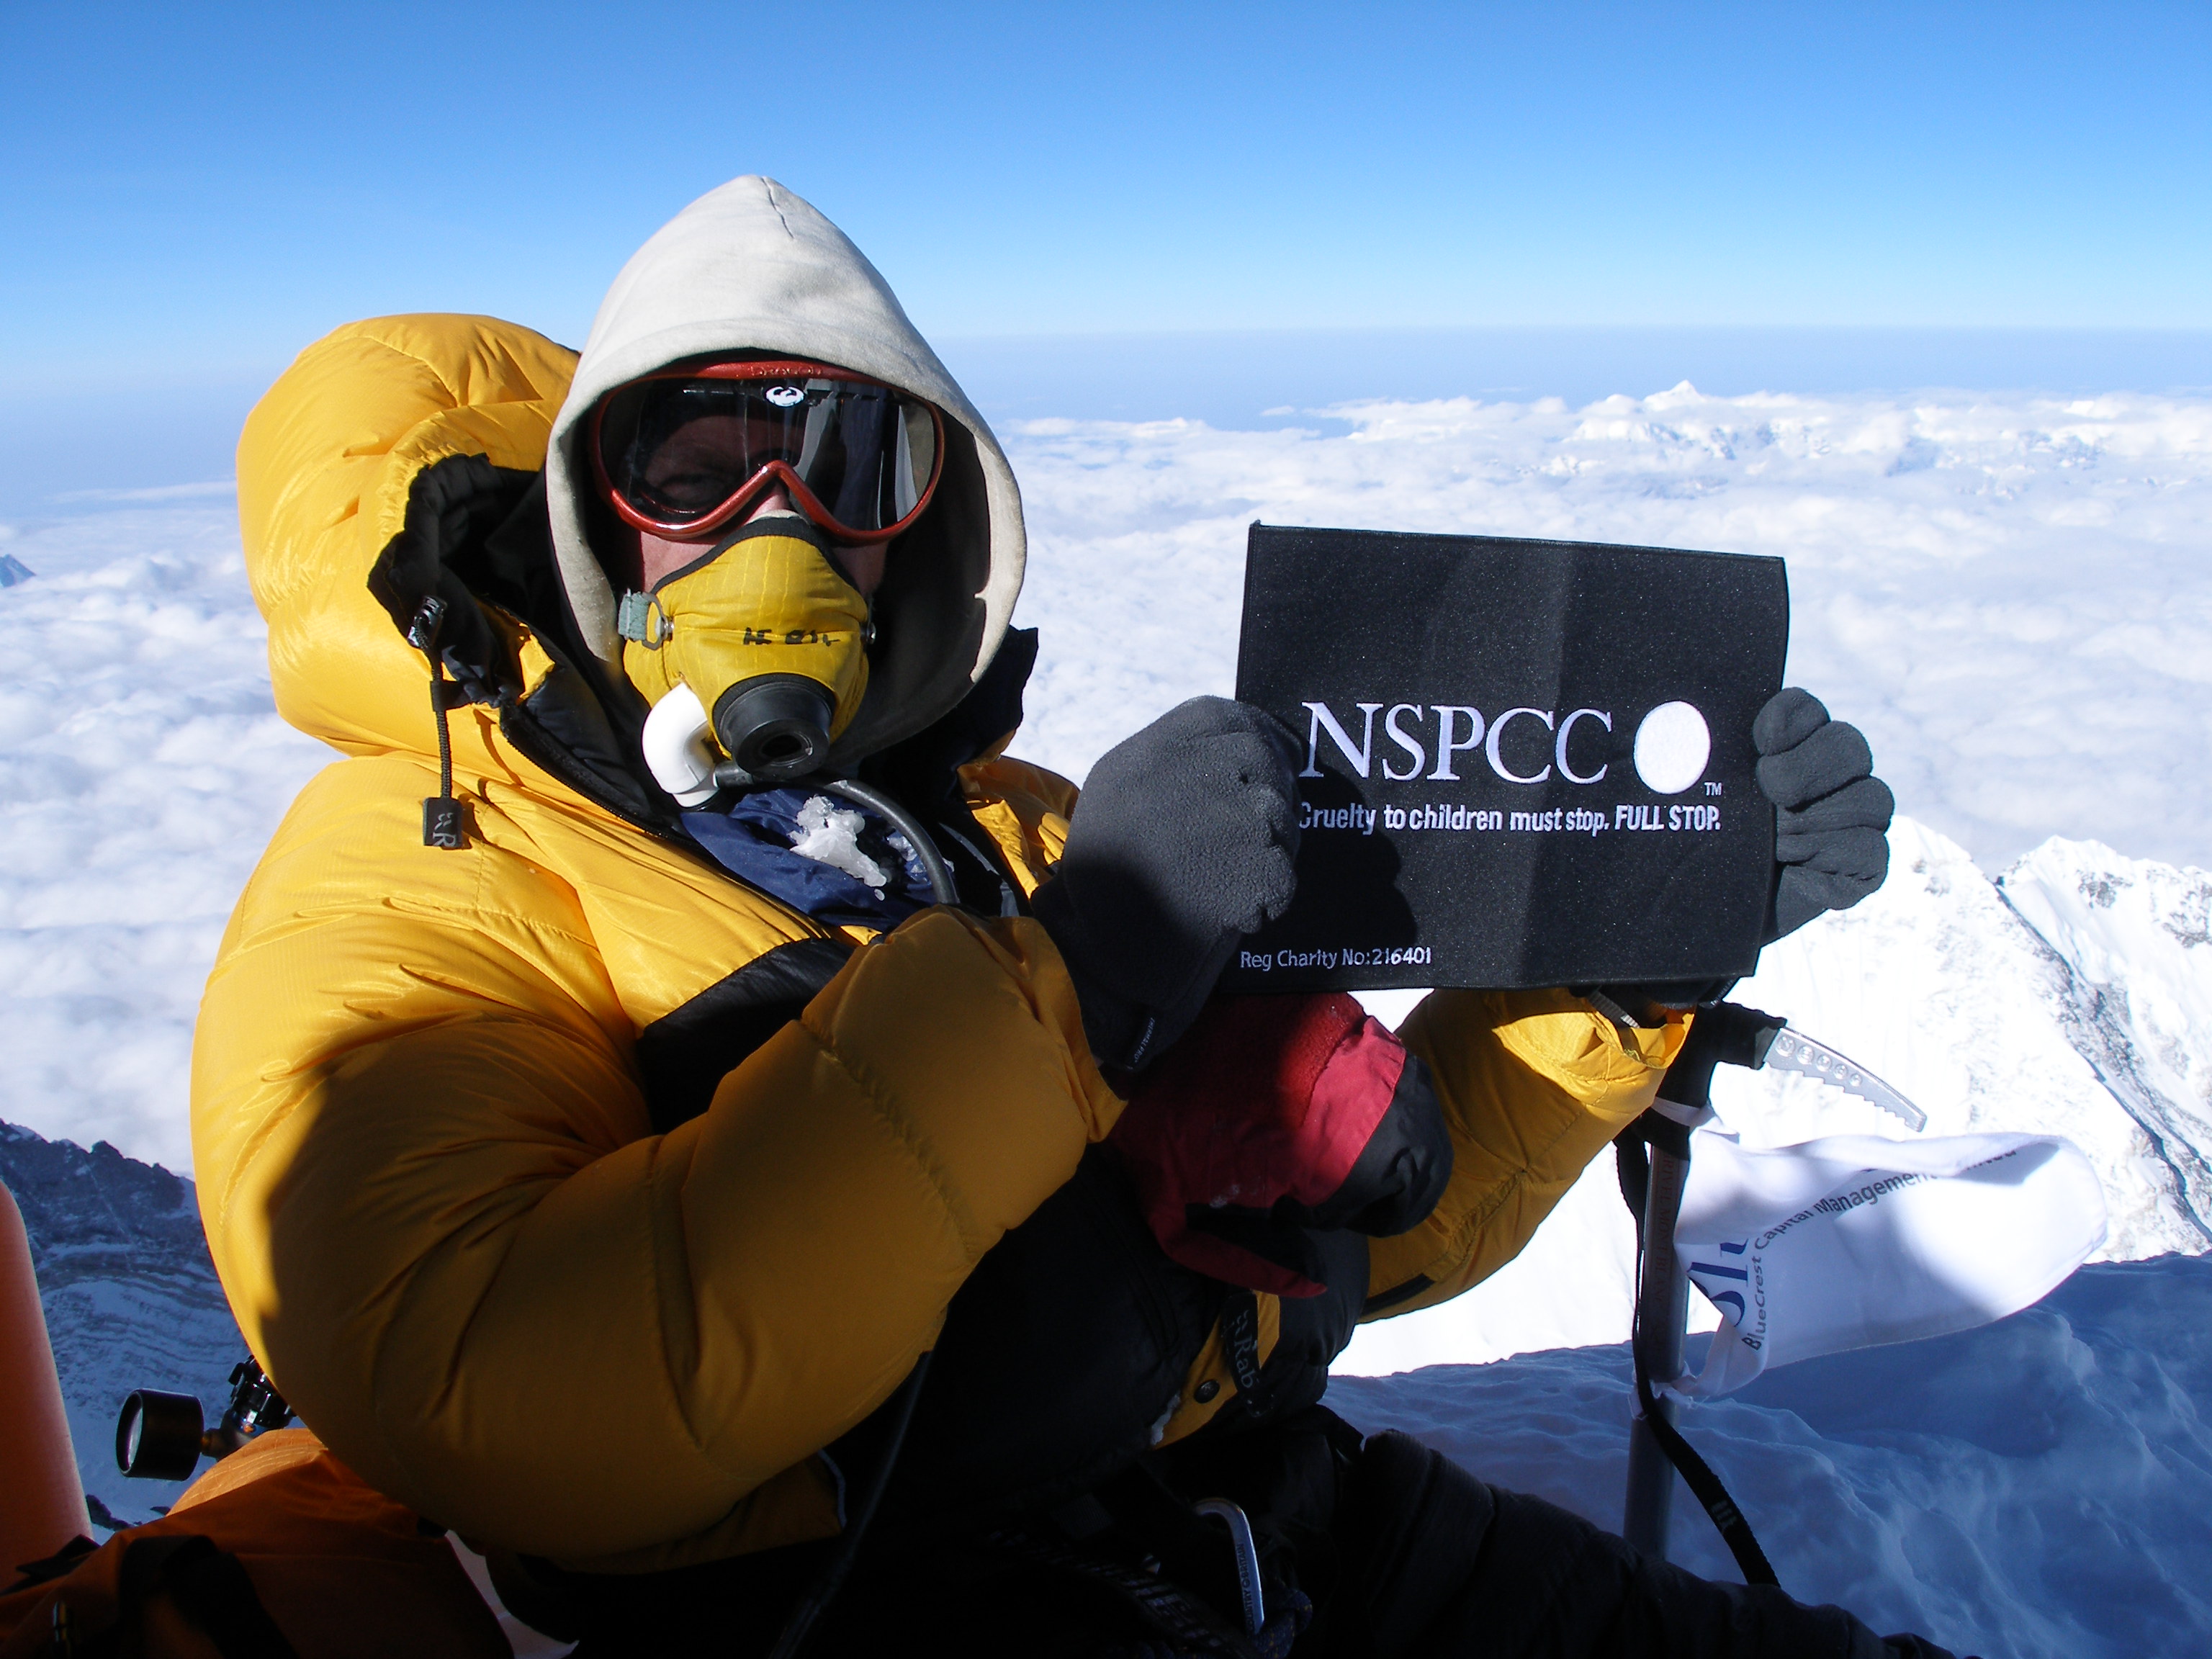 Image: Tait -Everest Summit / Nspcc Banner